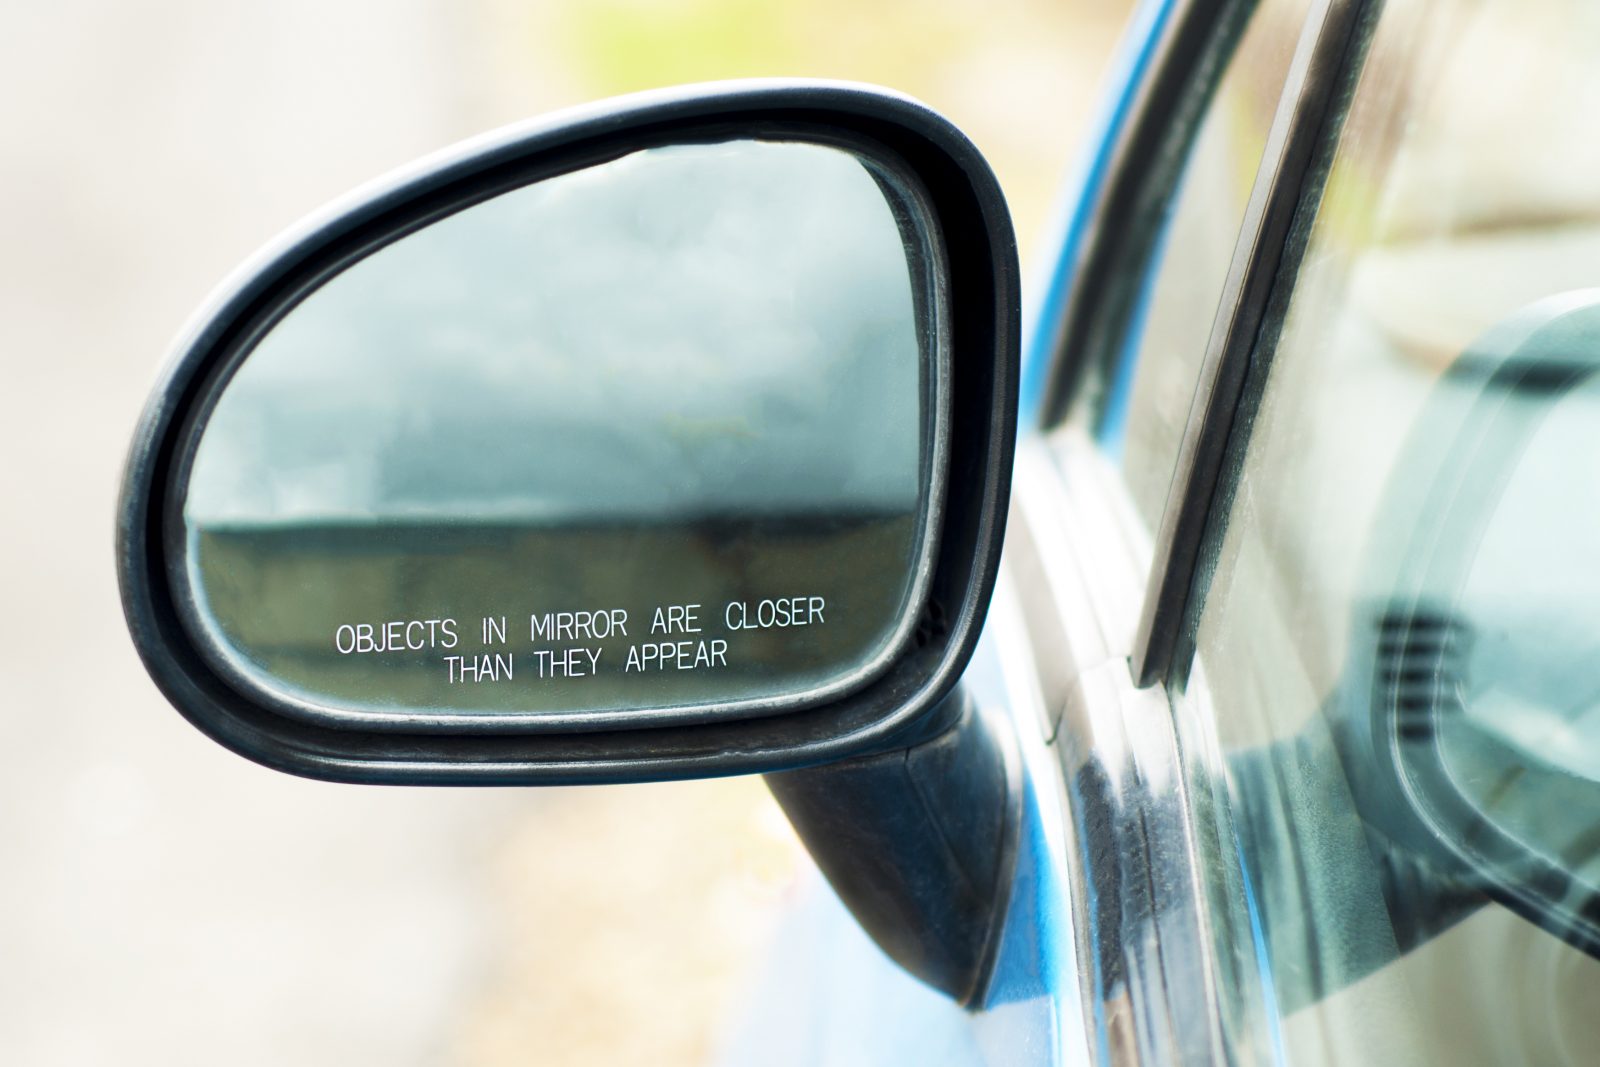 The inscription on the car side mirror: 